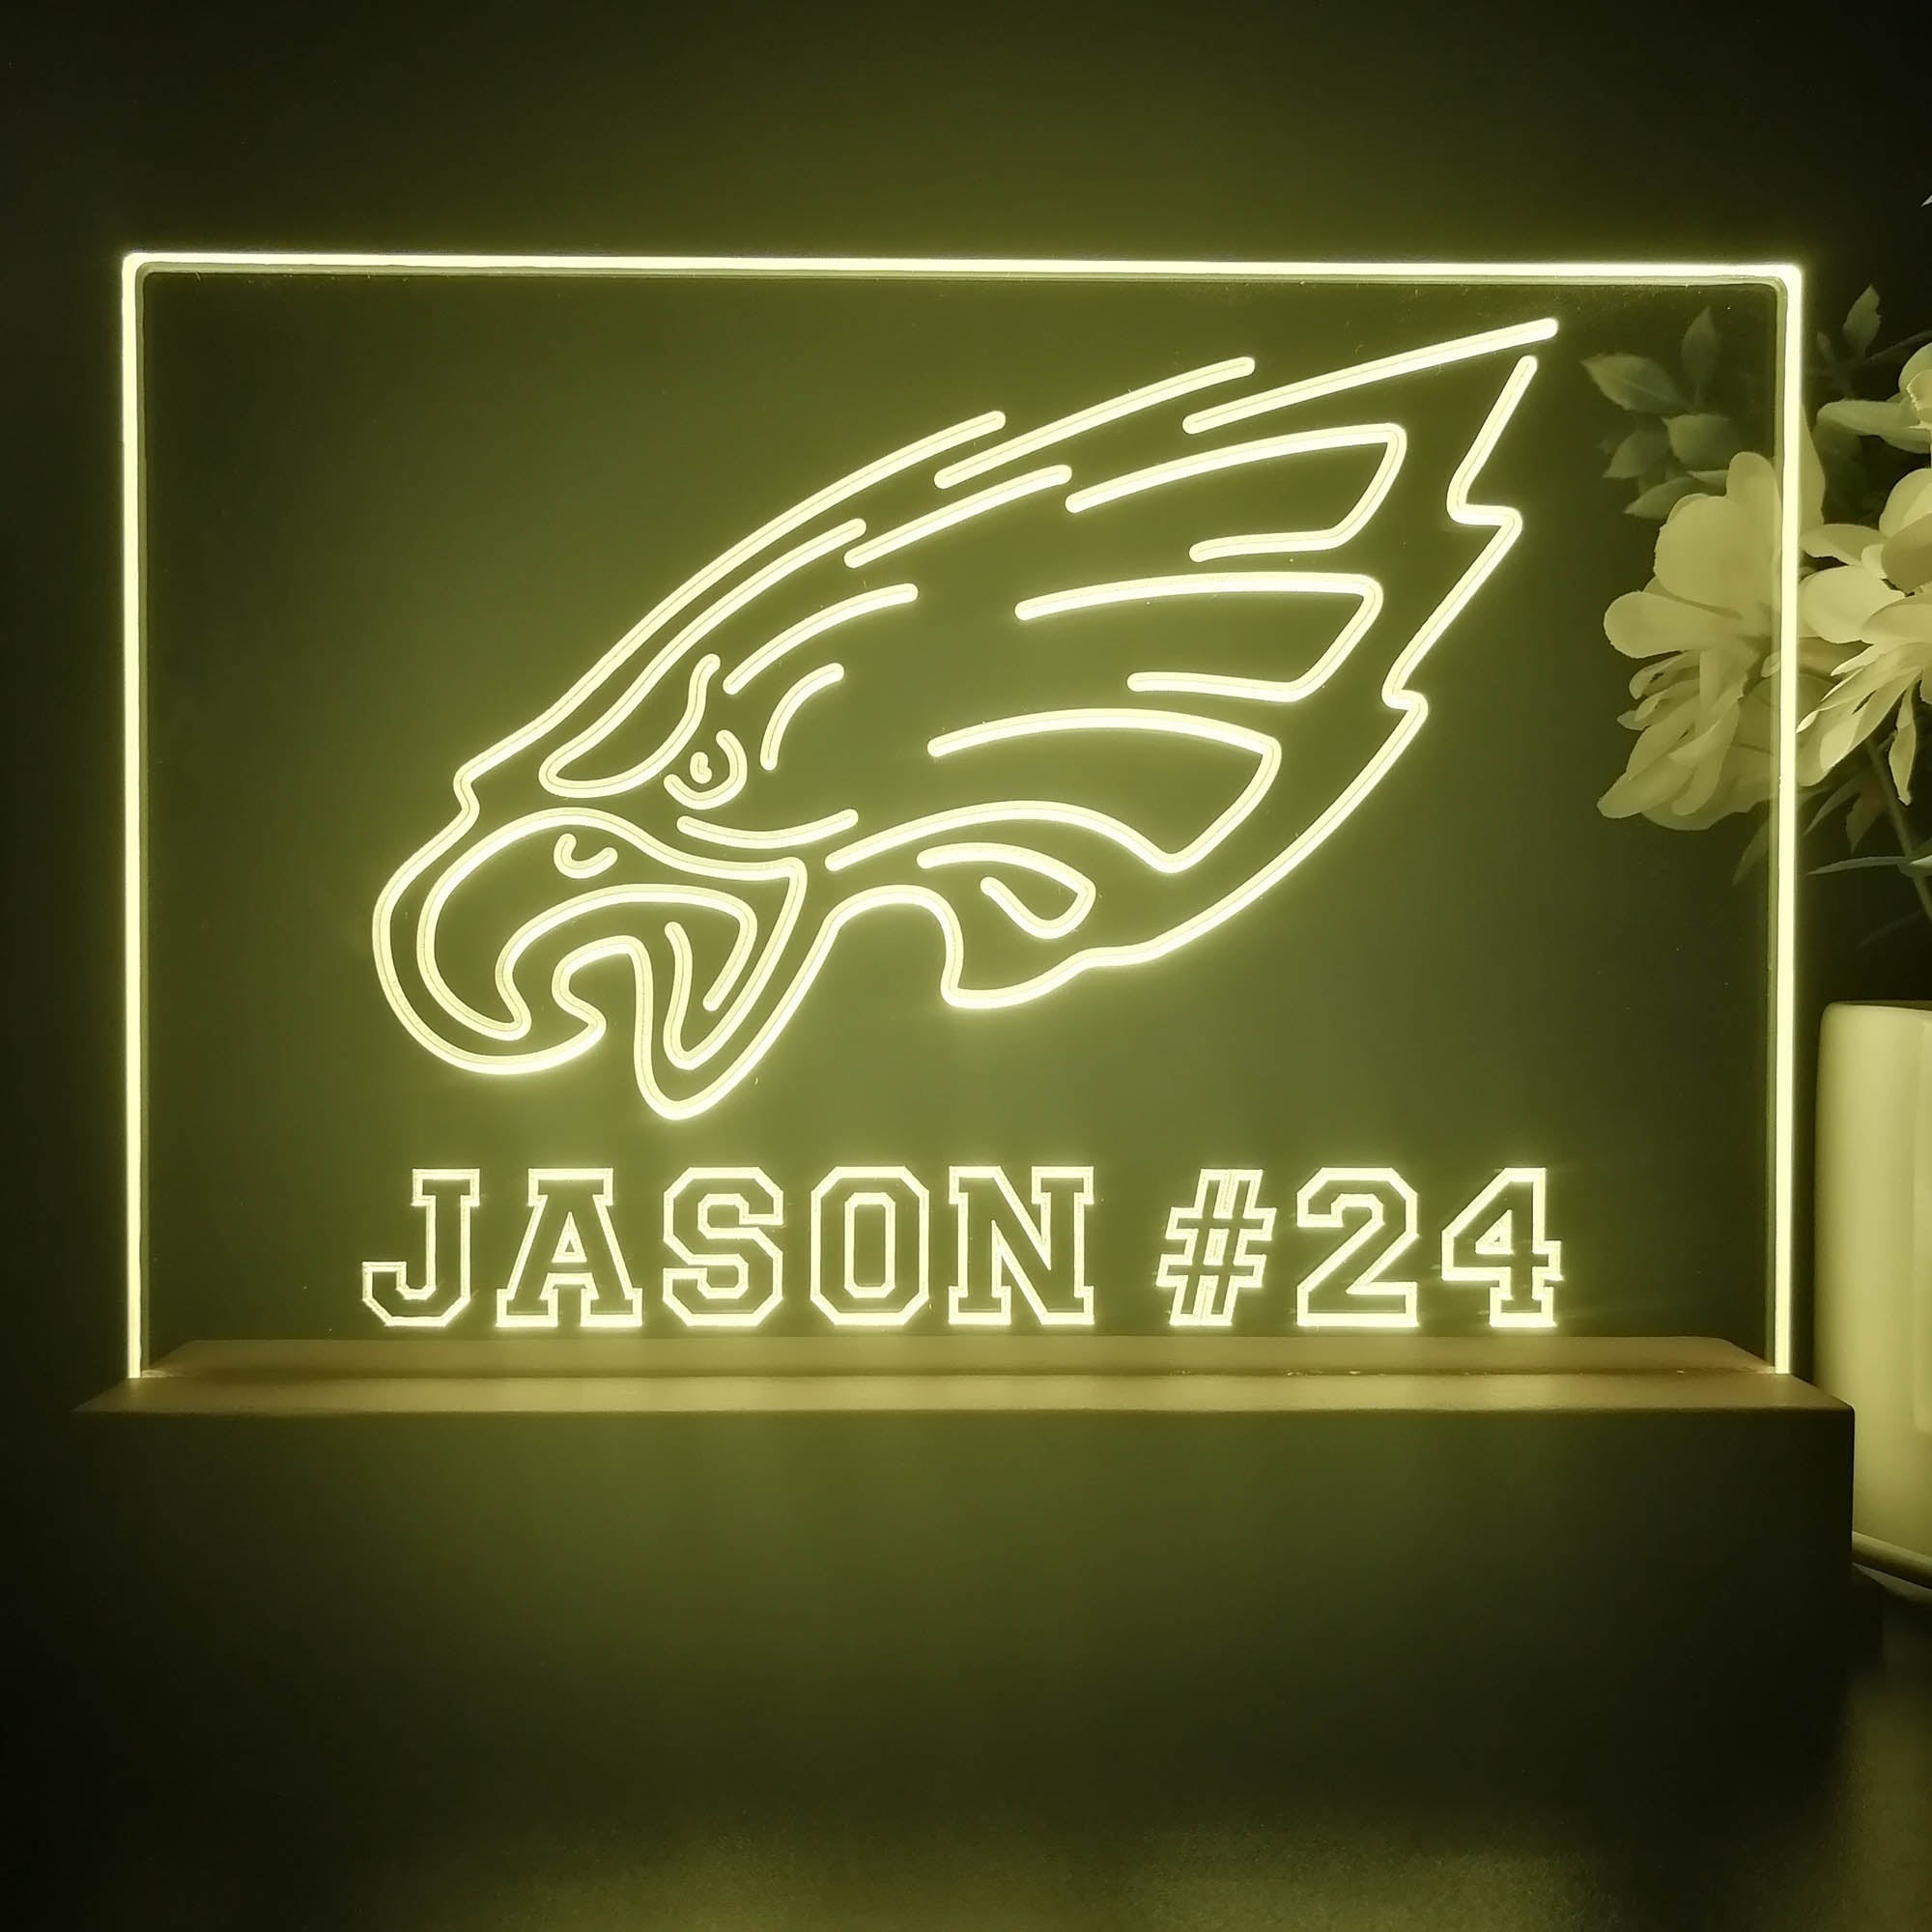 Personalized Philadelphia Eagles Souvenir Neon LED Night Light Sign